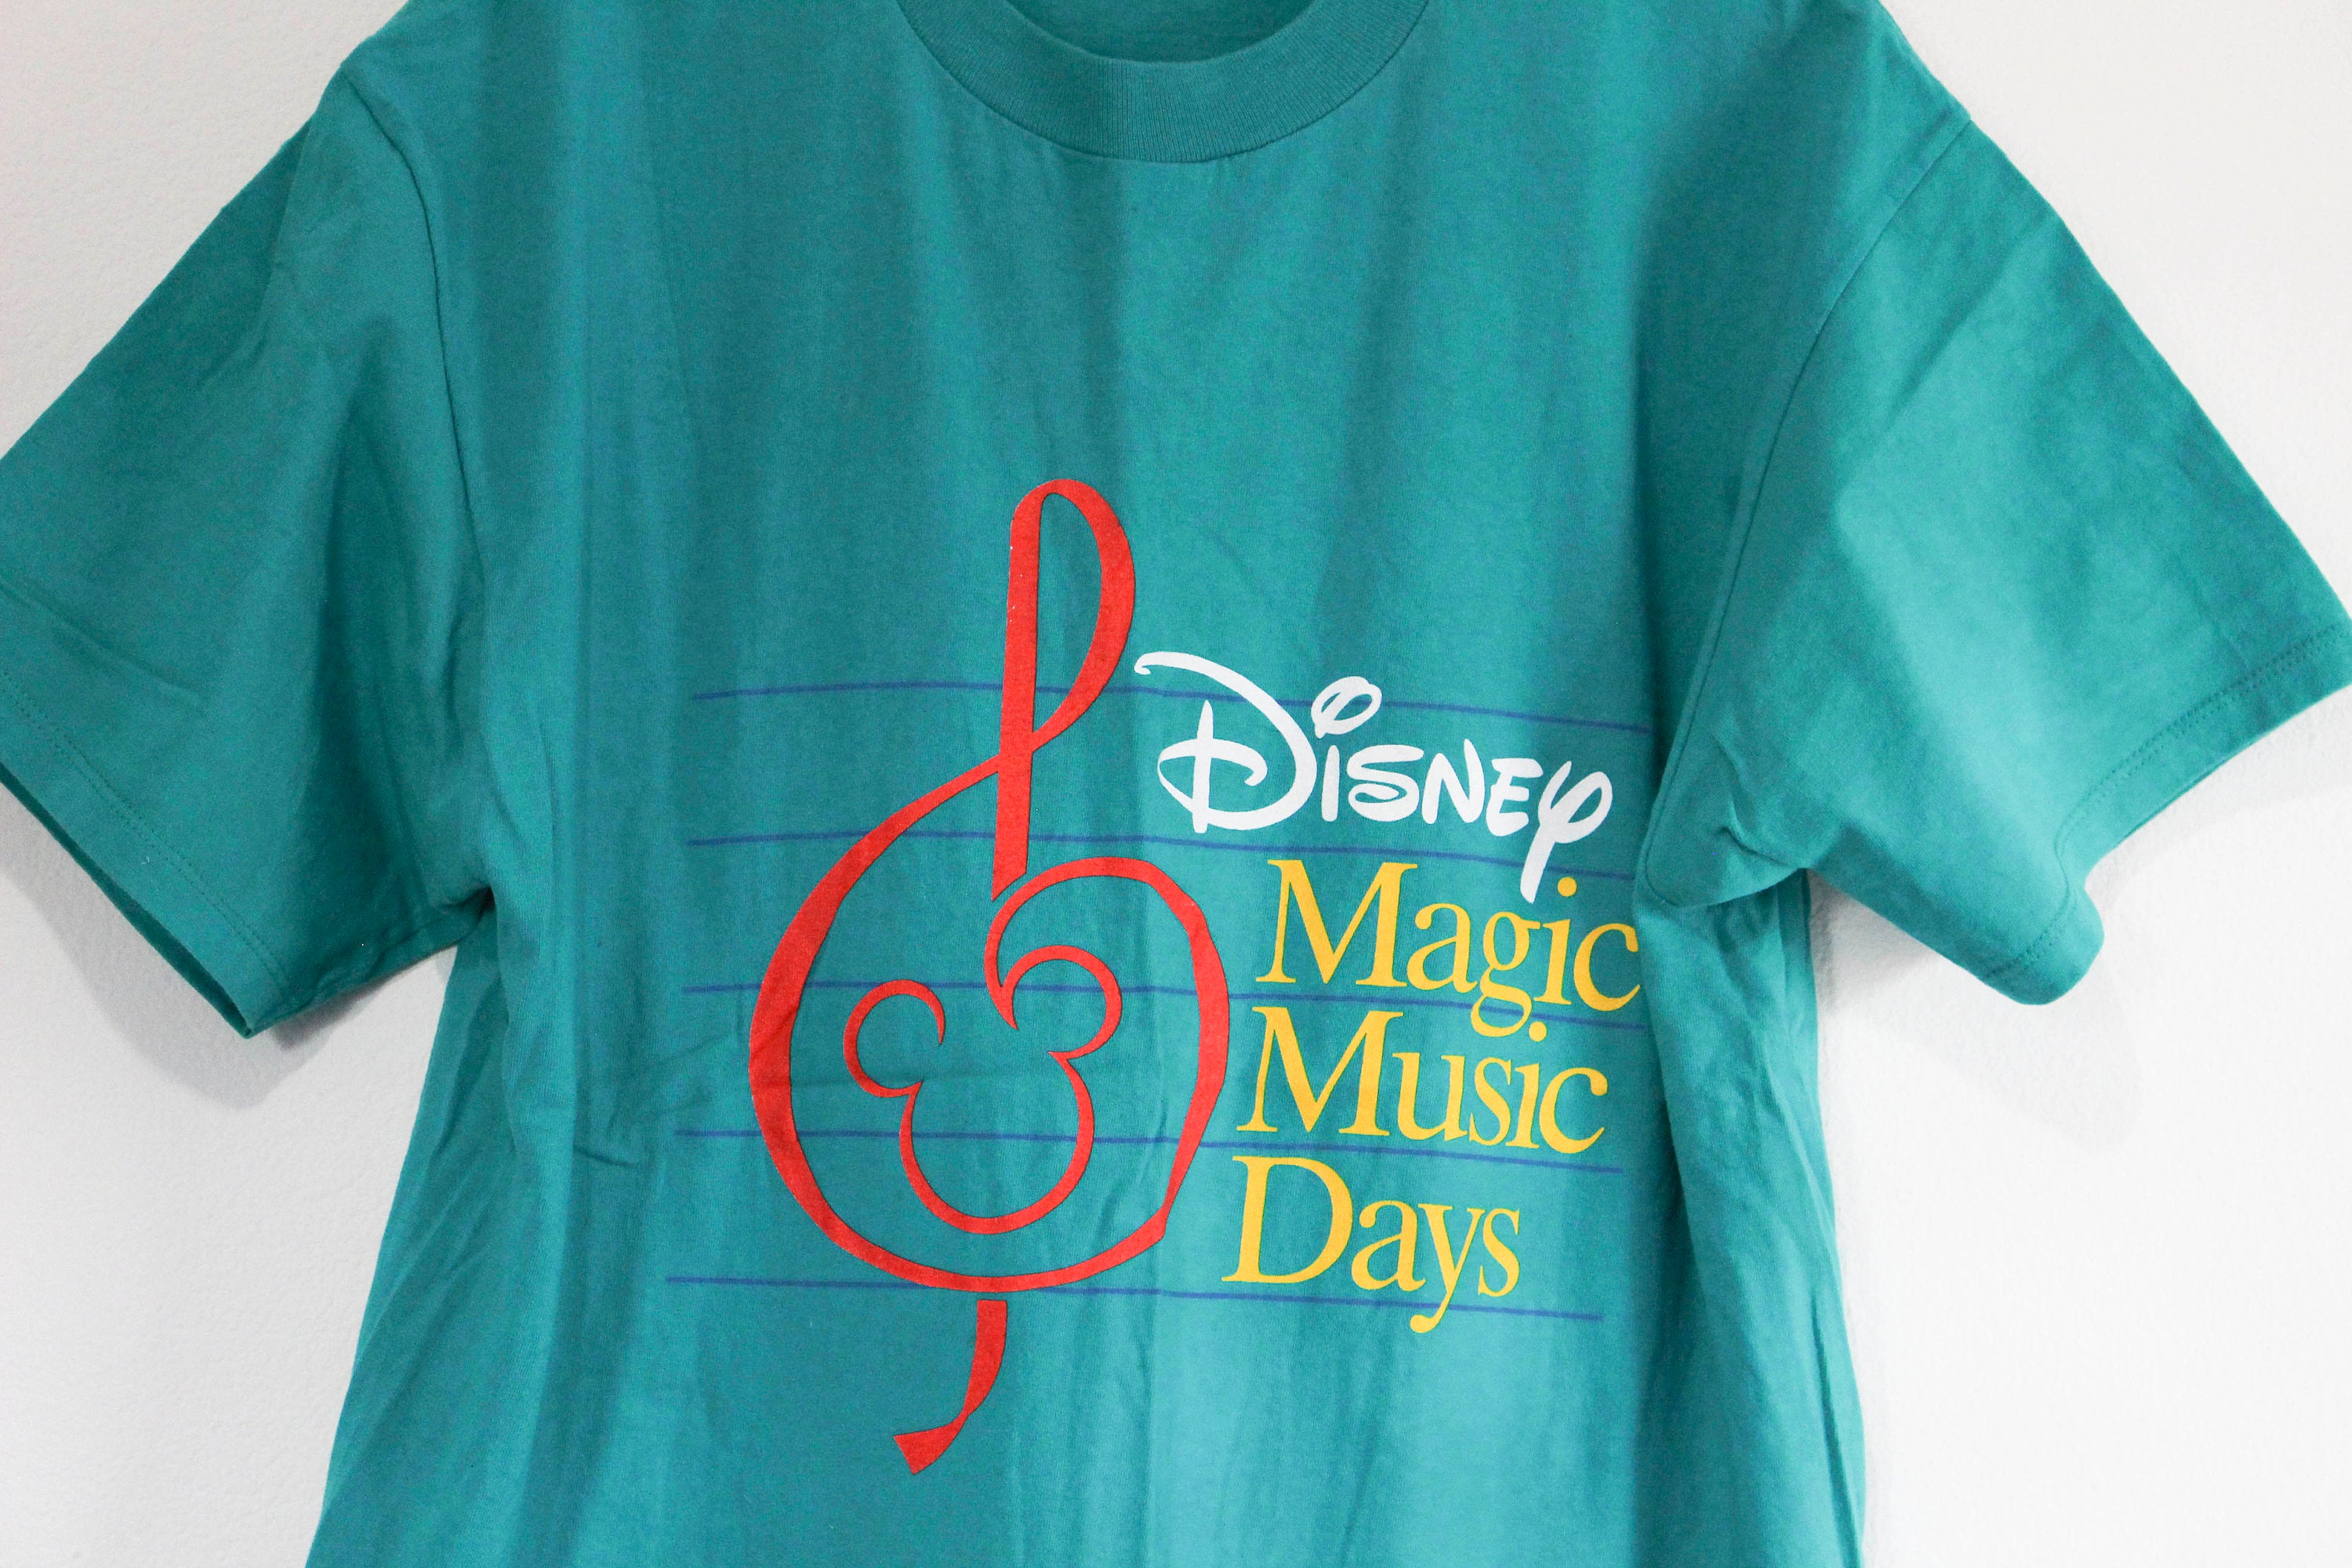 Vintage Walt Disney Magic Music Days T-Shirt by Disney Designs